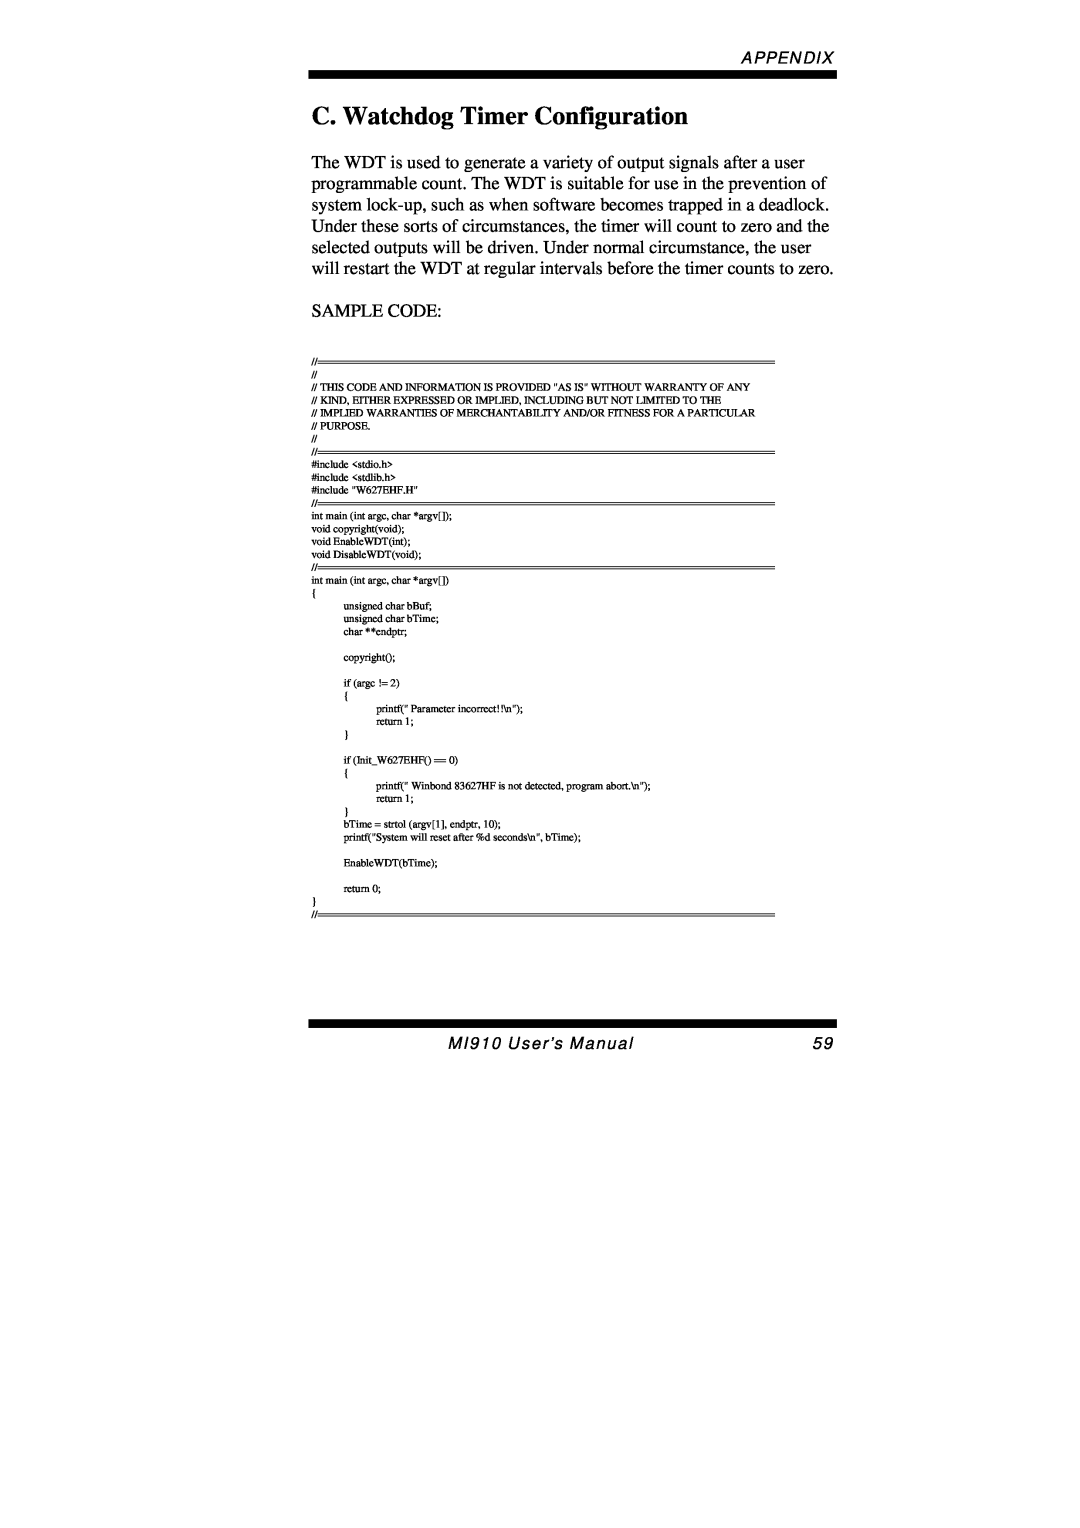 Intel MI910F user manual C. Watchdog Timer Configuration, Sample Code, Appendix, MI910 User’s Manual 